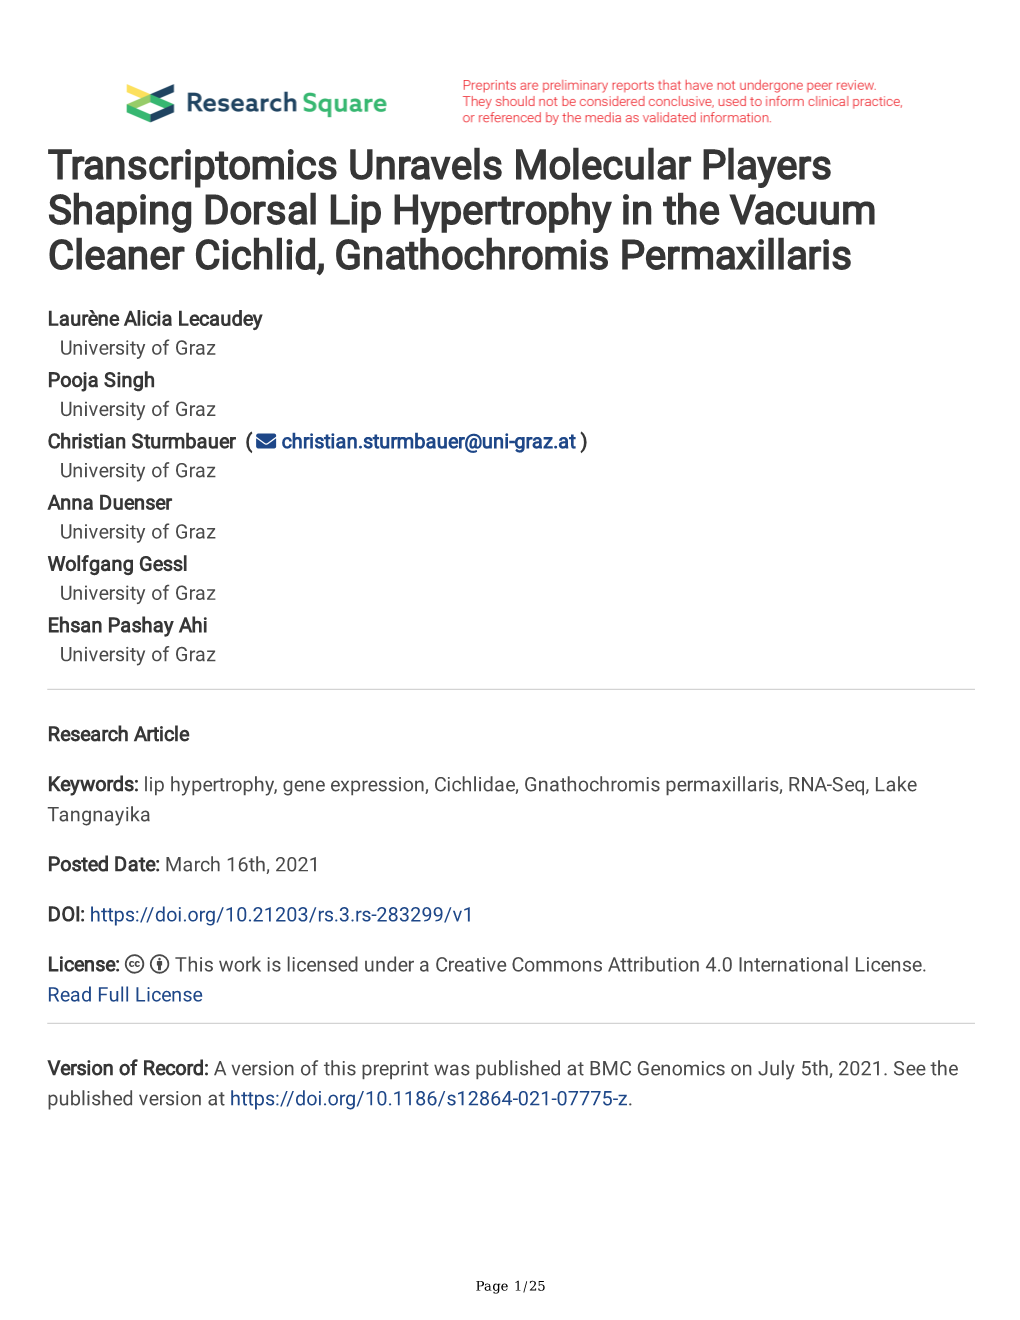 Transcriptomics Unravels Molecular Players Shaping Dorsal Lip Hypertrophy in the Vacuum Cleaner Cichlid, Gnathochromis Permaxillaris